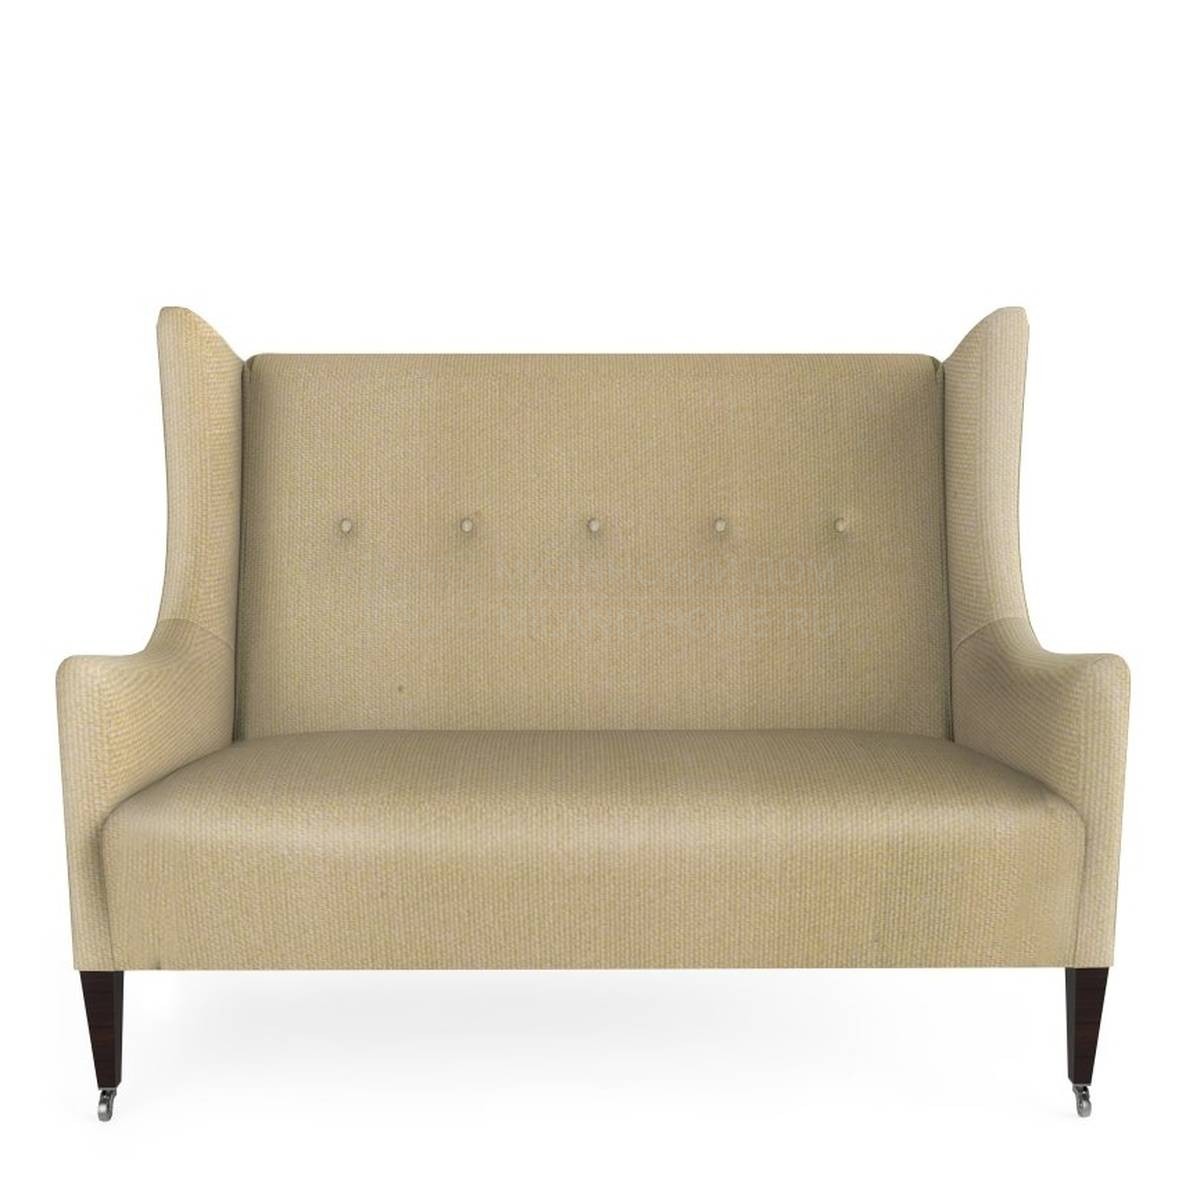 Прямой диван Amarillis two seater sofa из Италии фабрики MARIONI